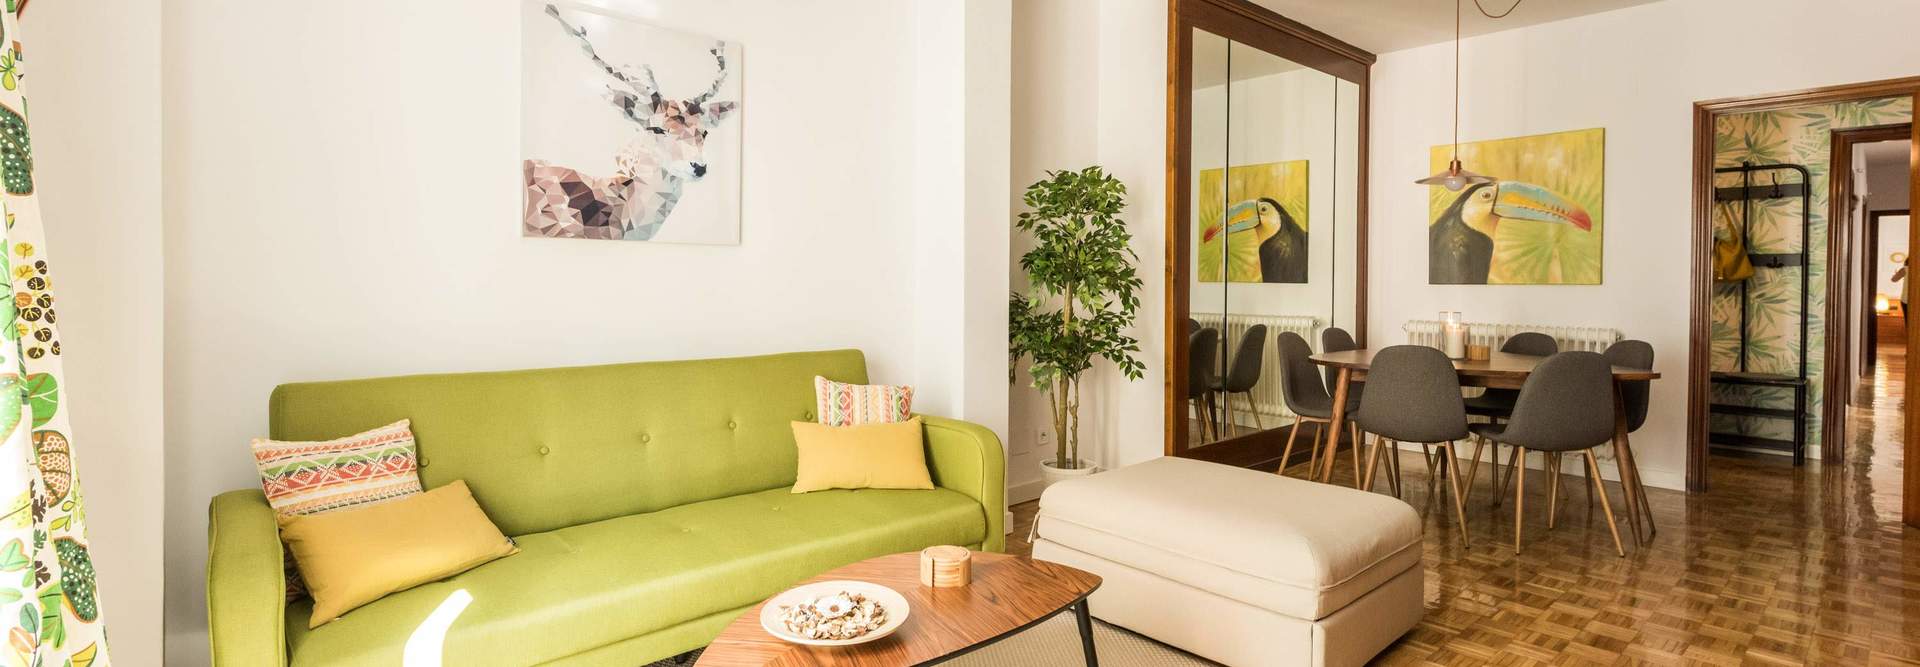 Alquiler de apartamentos por días Madrid centro.